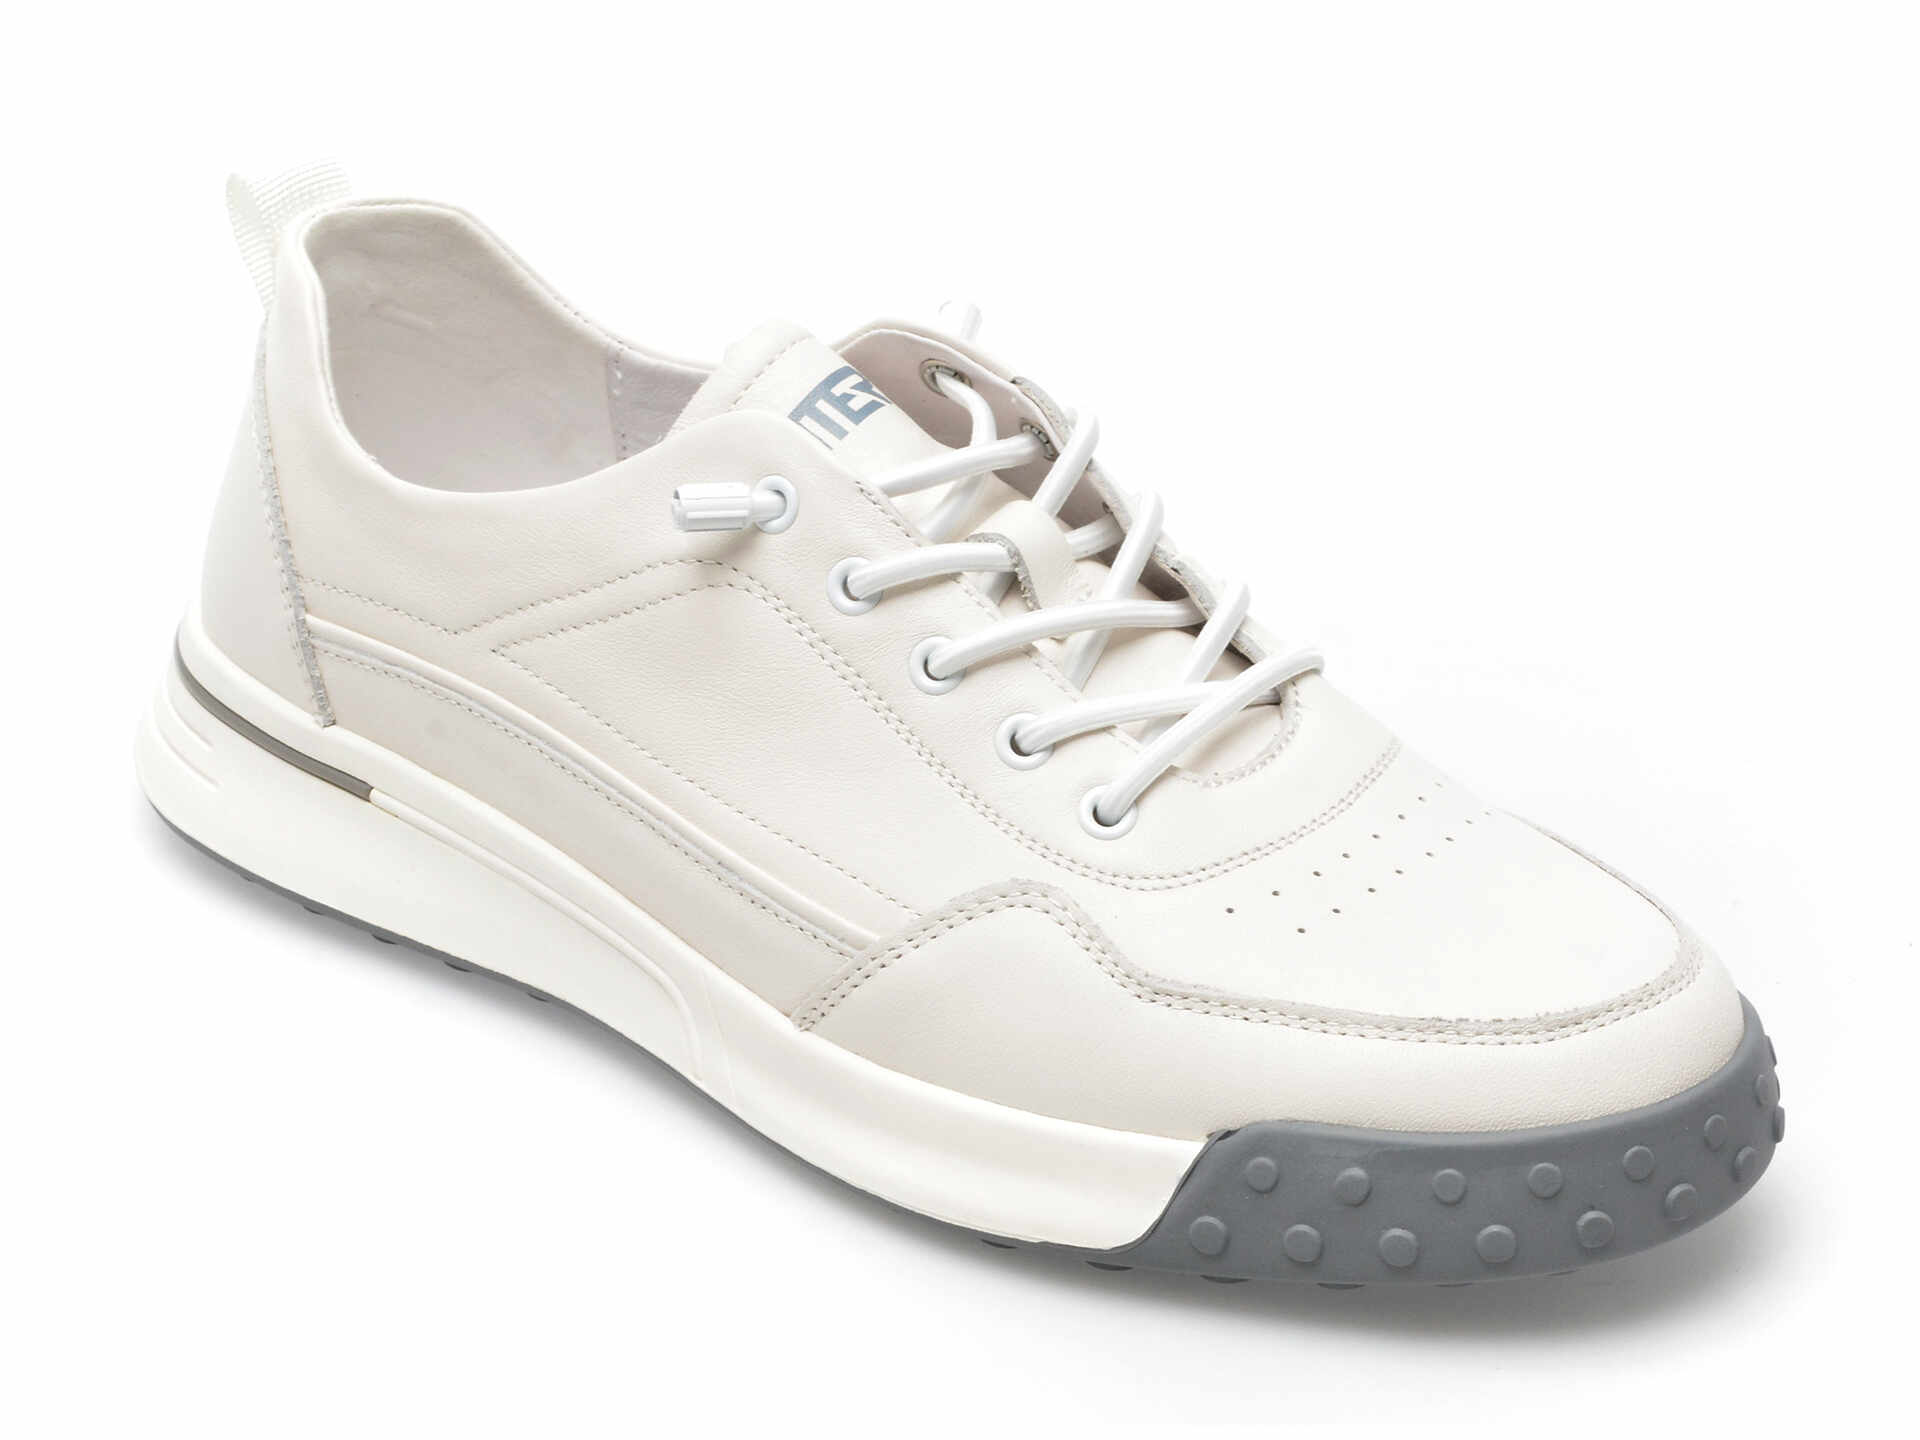 Pantofi sport OTTER albi, CJ22015, din piele naturala